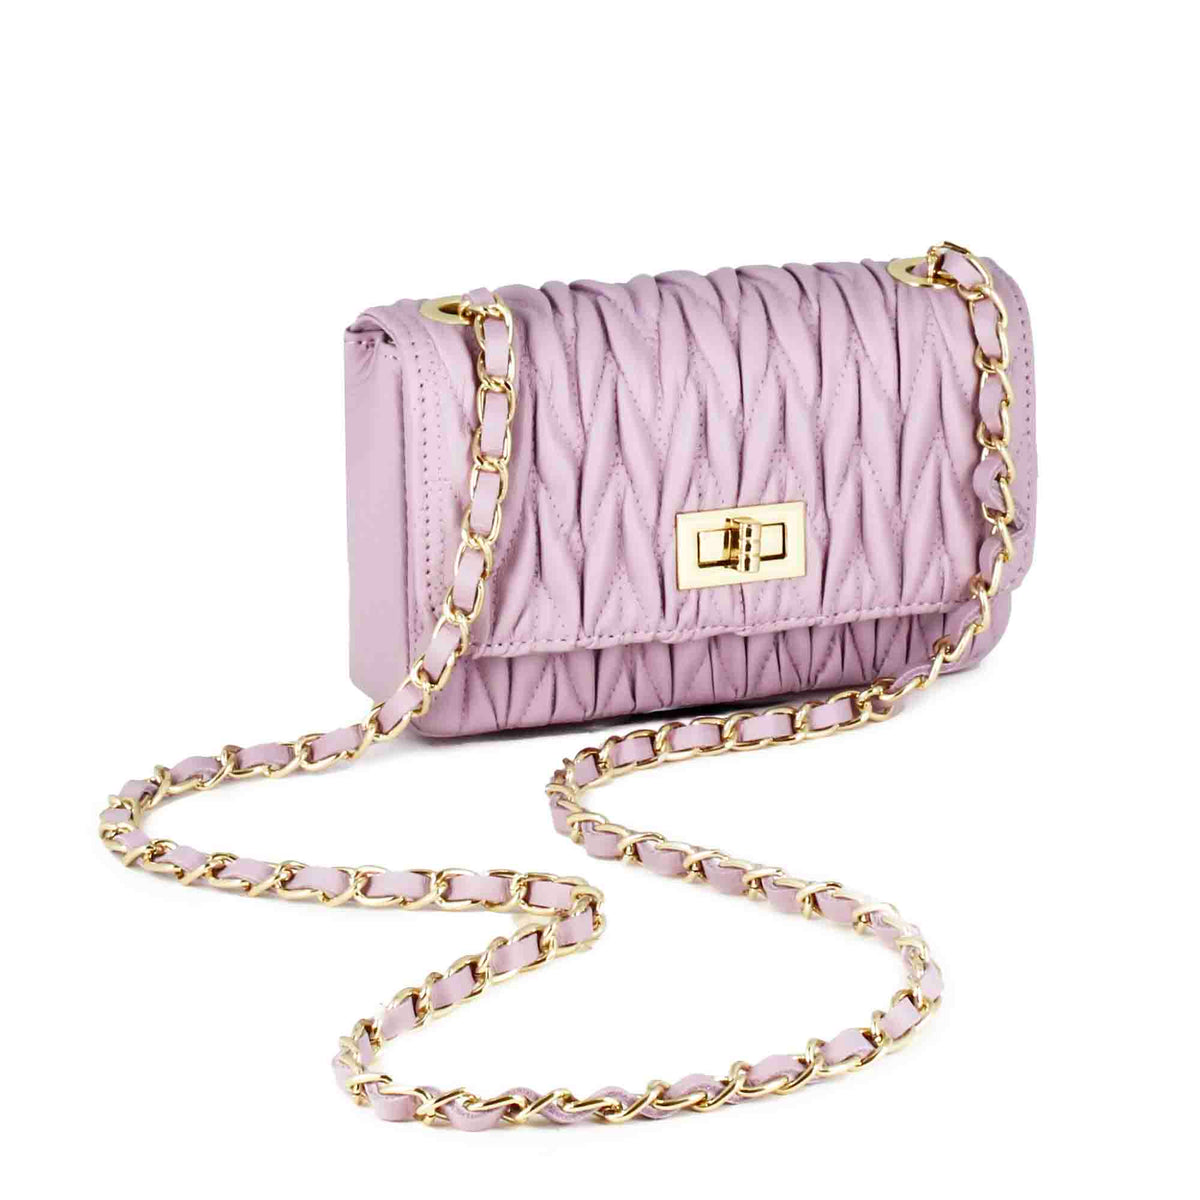 Women's handbag in purple leather with jewel shoulder strap